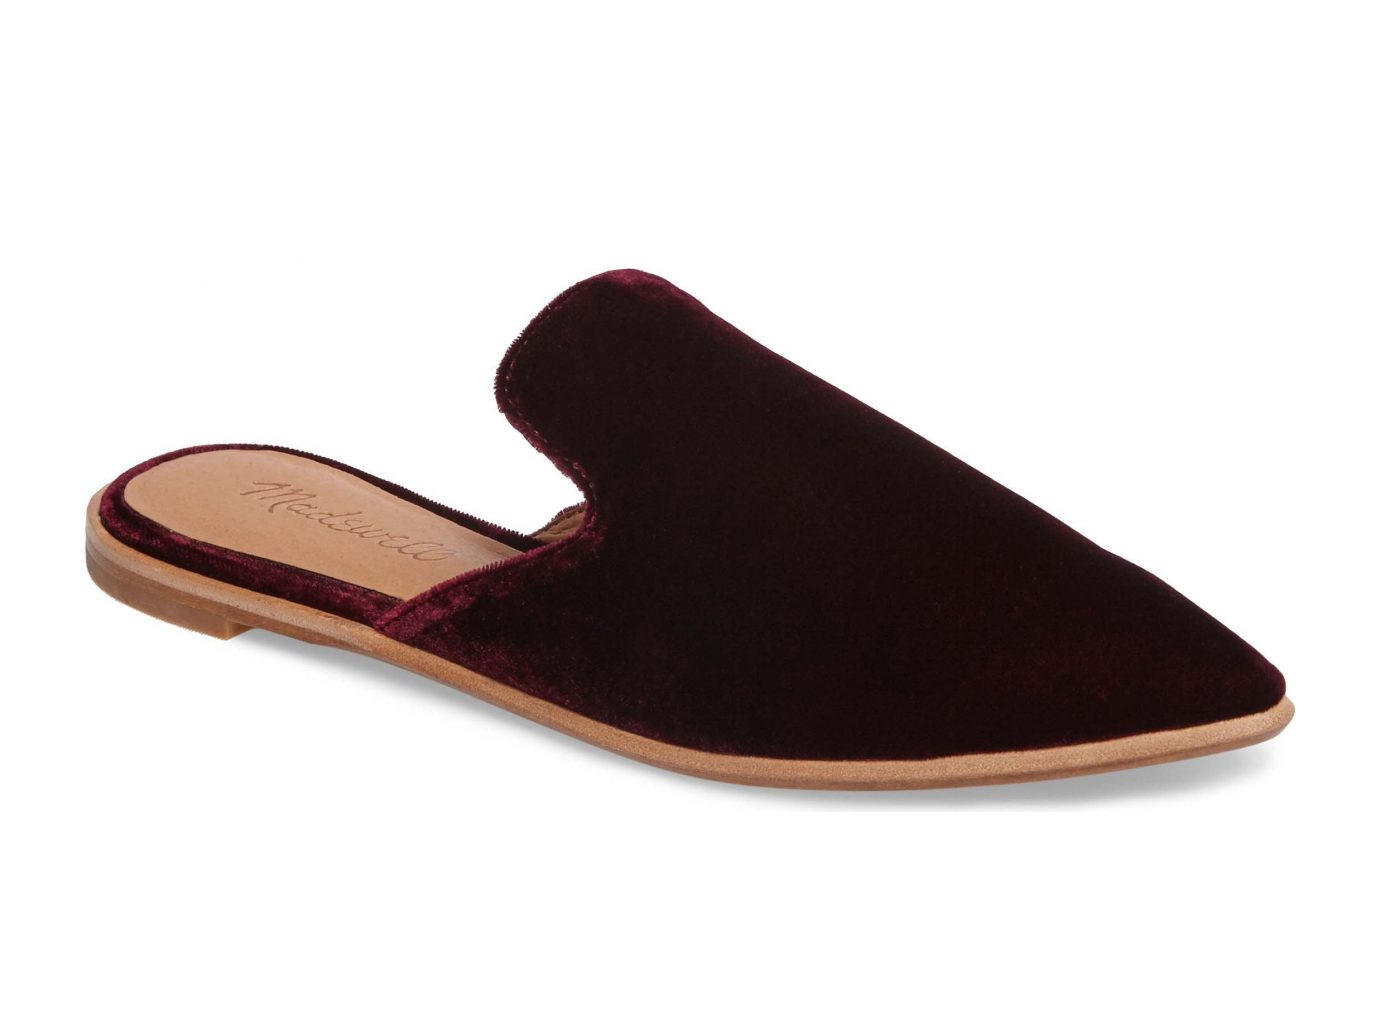 shopping Style + Design Travel Shop footwear shoe slipper brown product outdoor shoe product design walking shoe